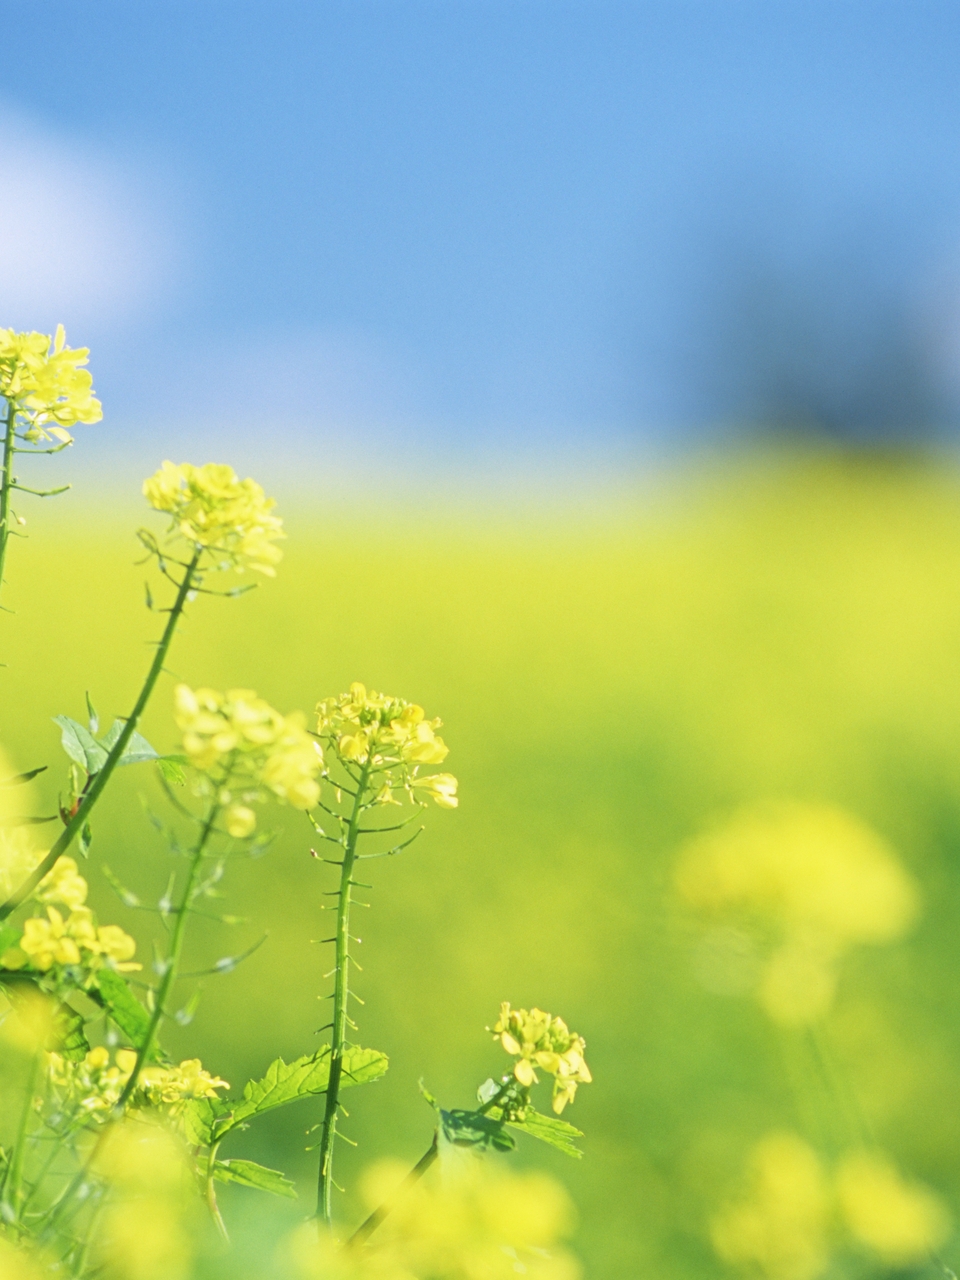 Image: Wildflowers, plants, grass, blur, field